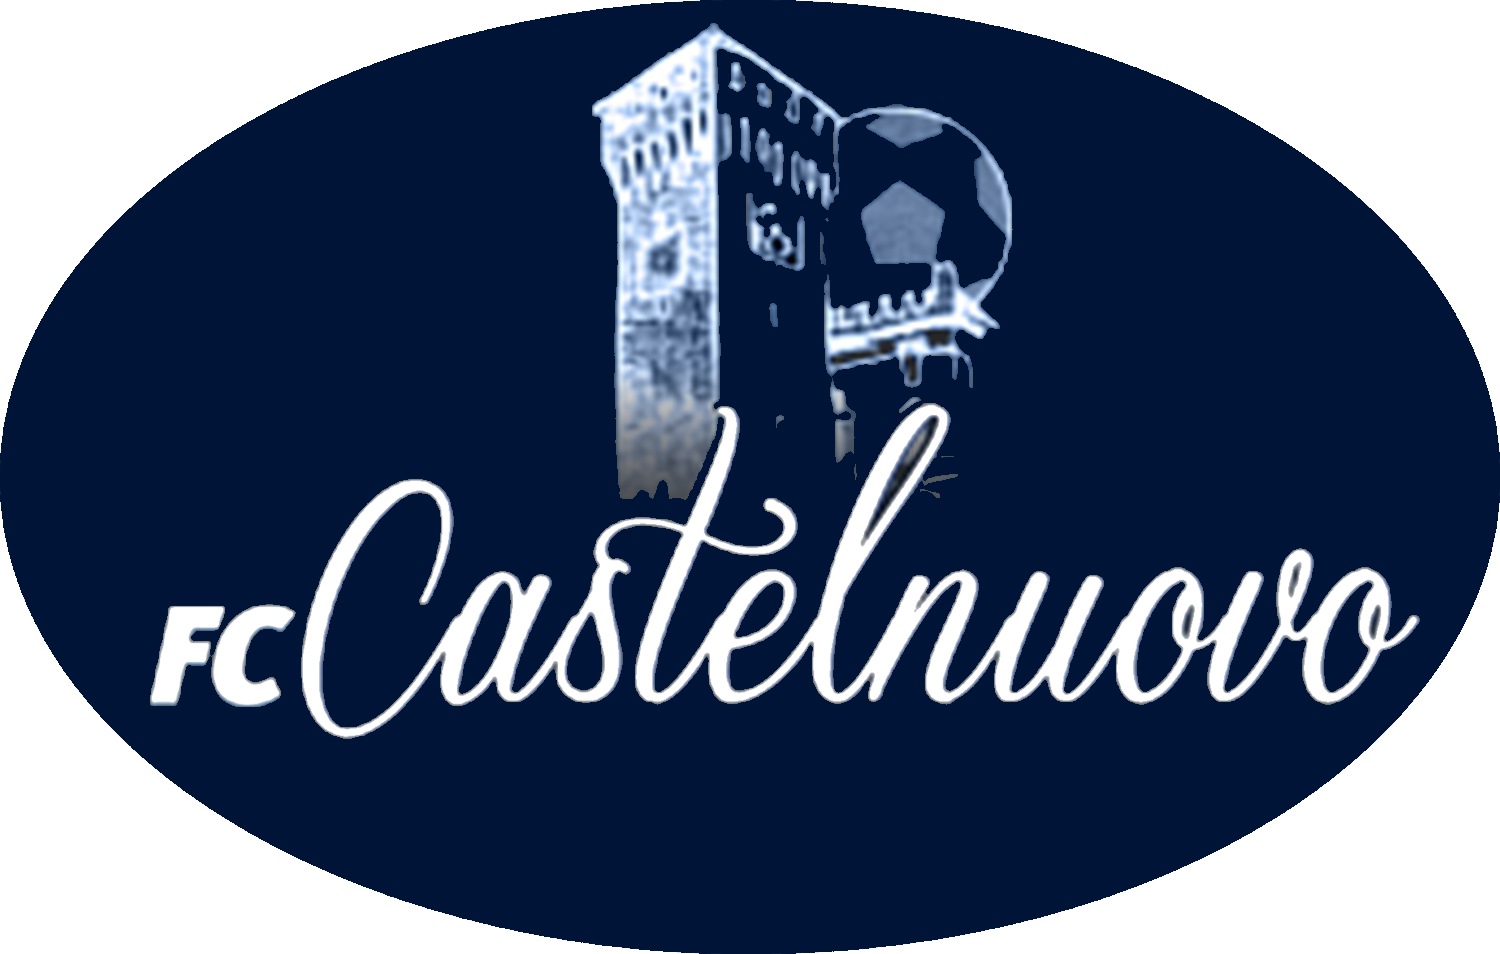 FC CASTELNUOVO v A.C. LAMA 80